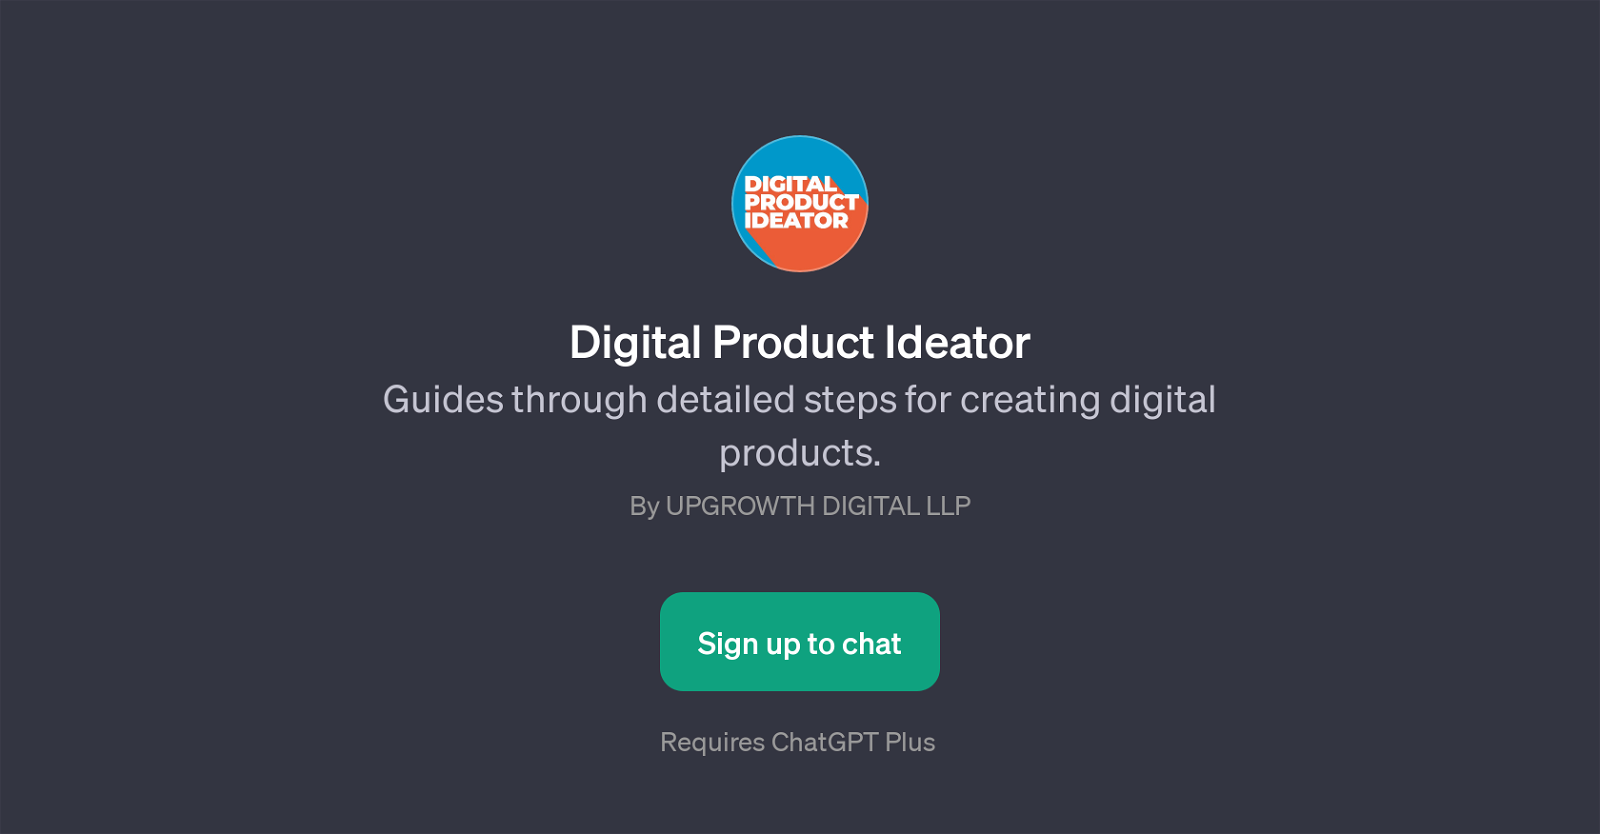 Digital Product Ideator website